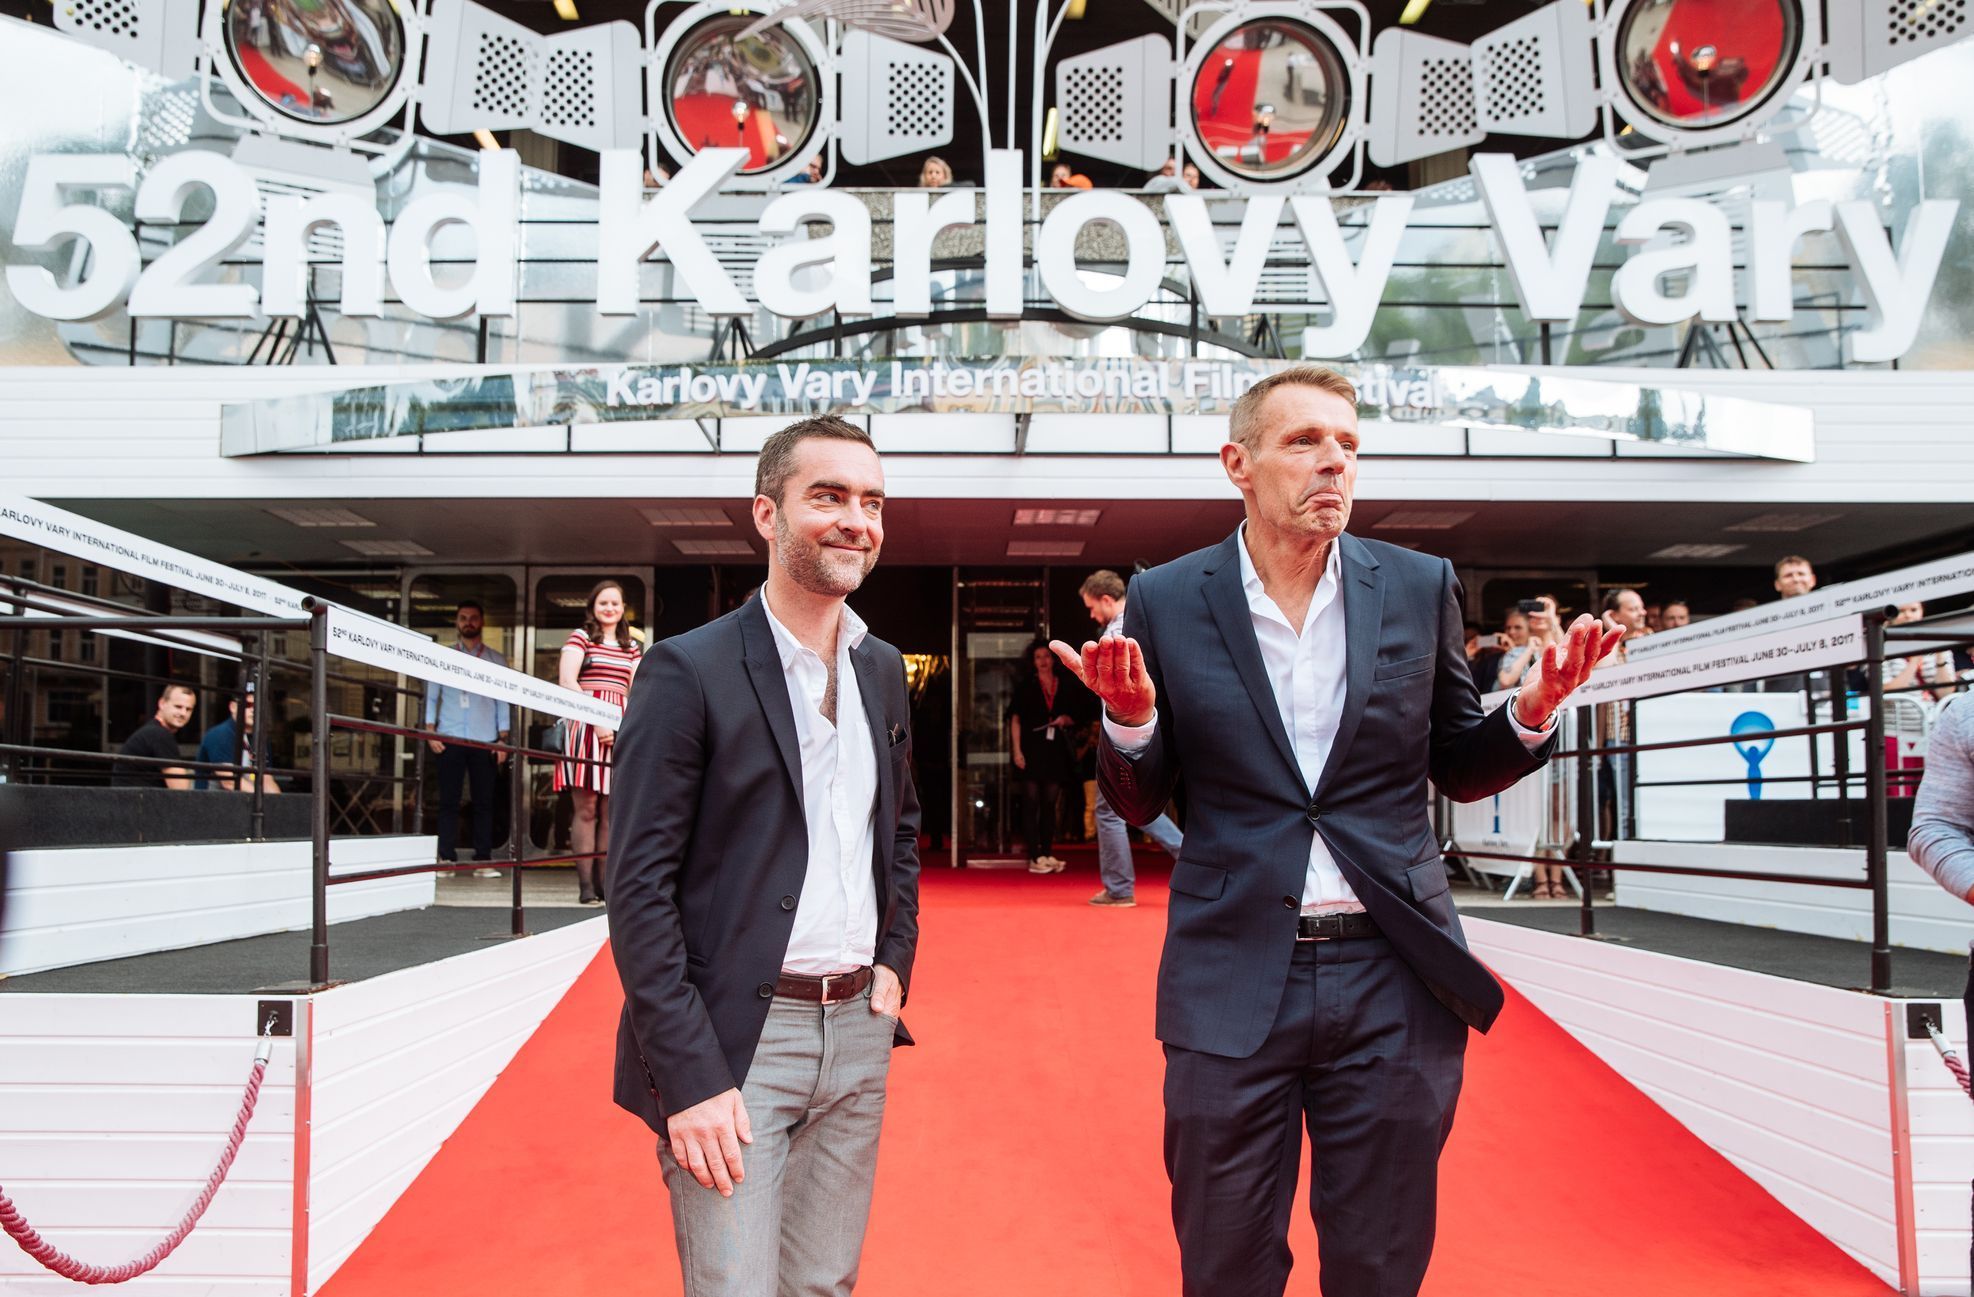 Mezinárodní filmový festival Karlovy Vary 2017